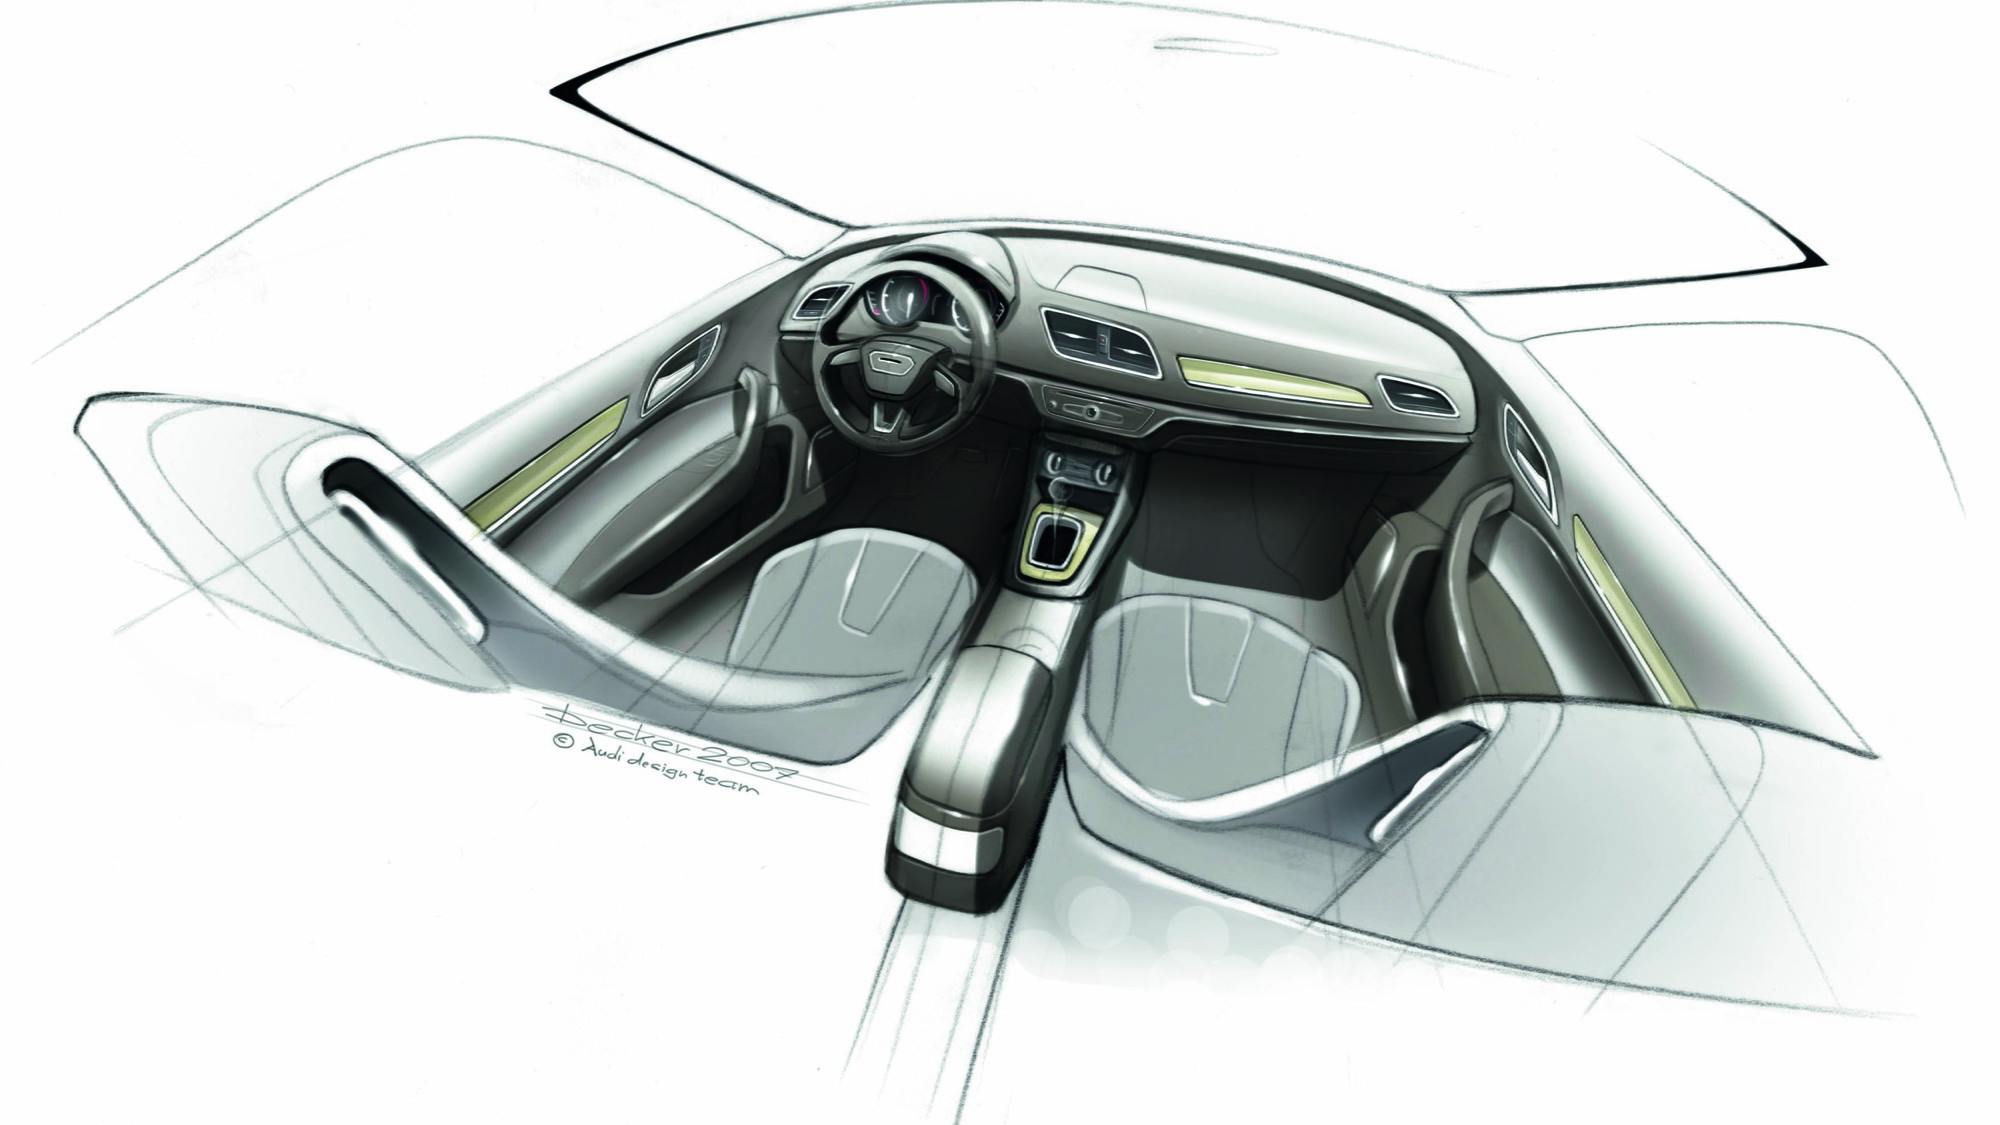 2012 Audi Q3 official sketches